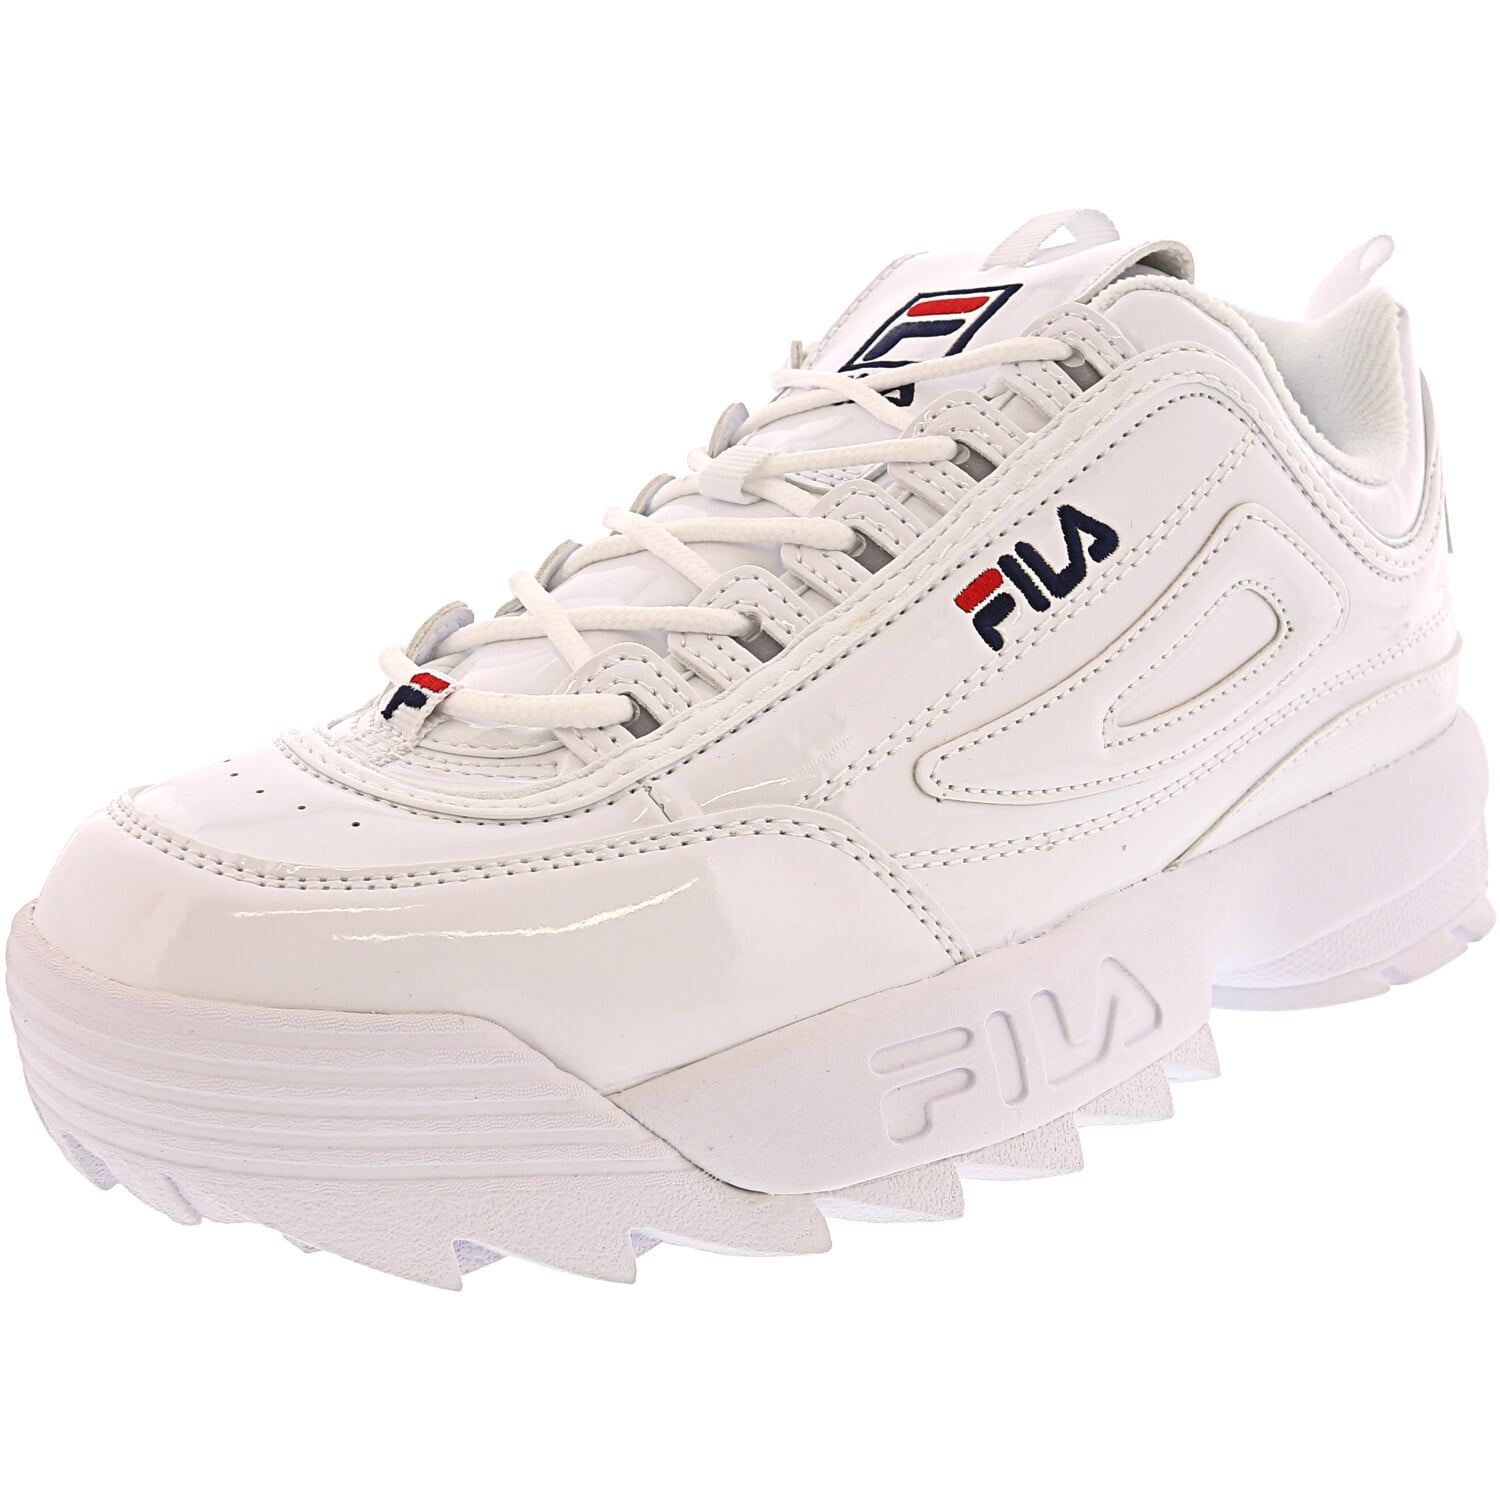 FILA - Fila Women's Disruptor Ii Premium Patent White / Navy Red Ankle ...